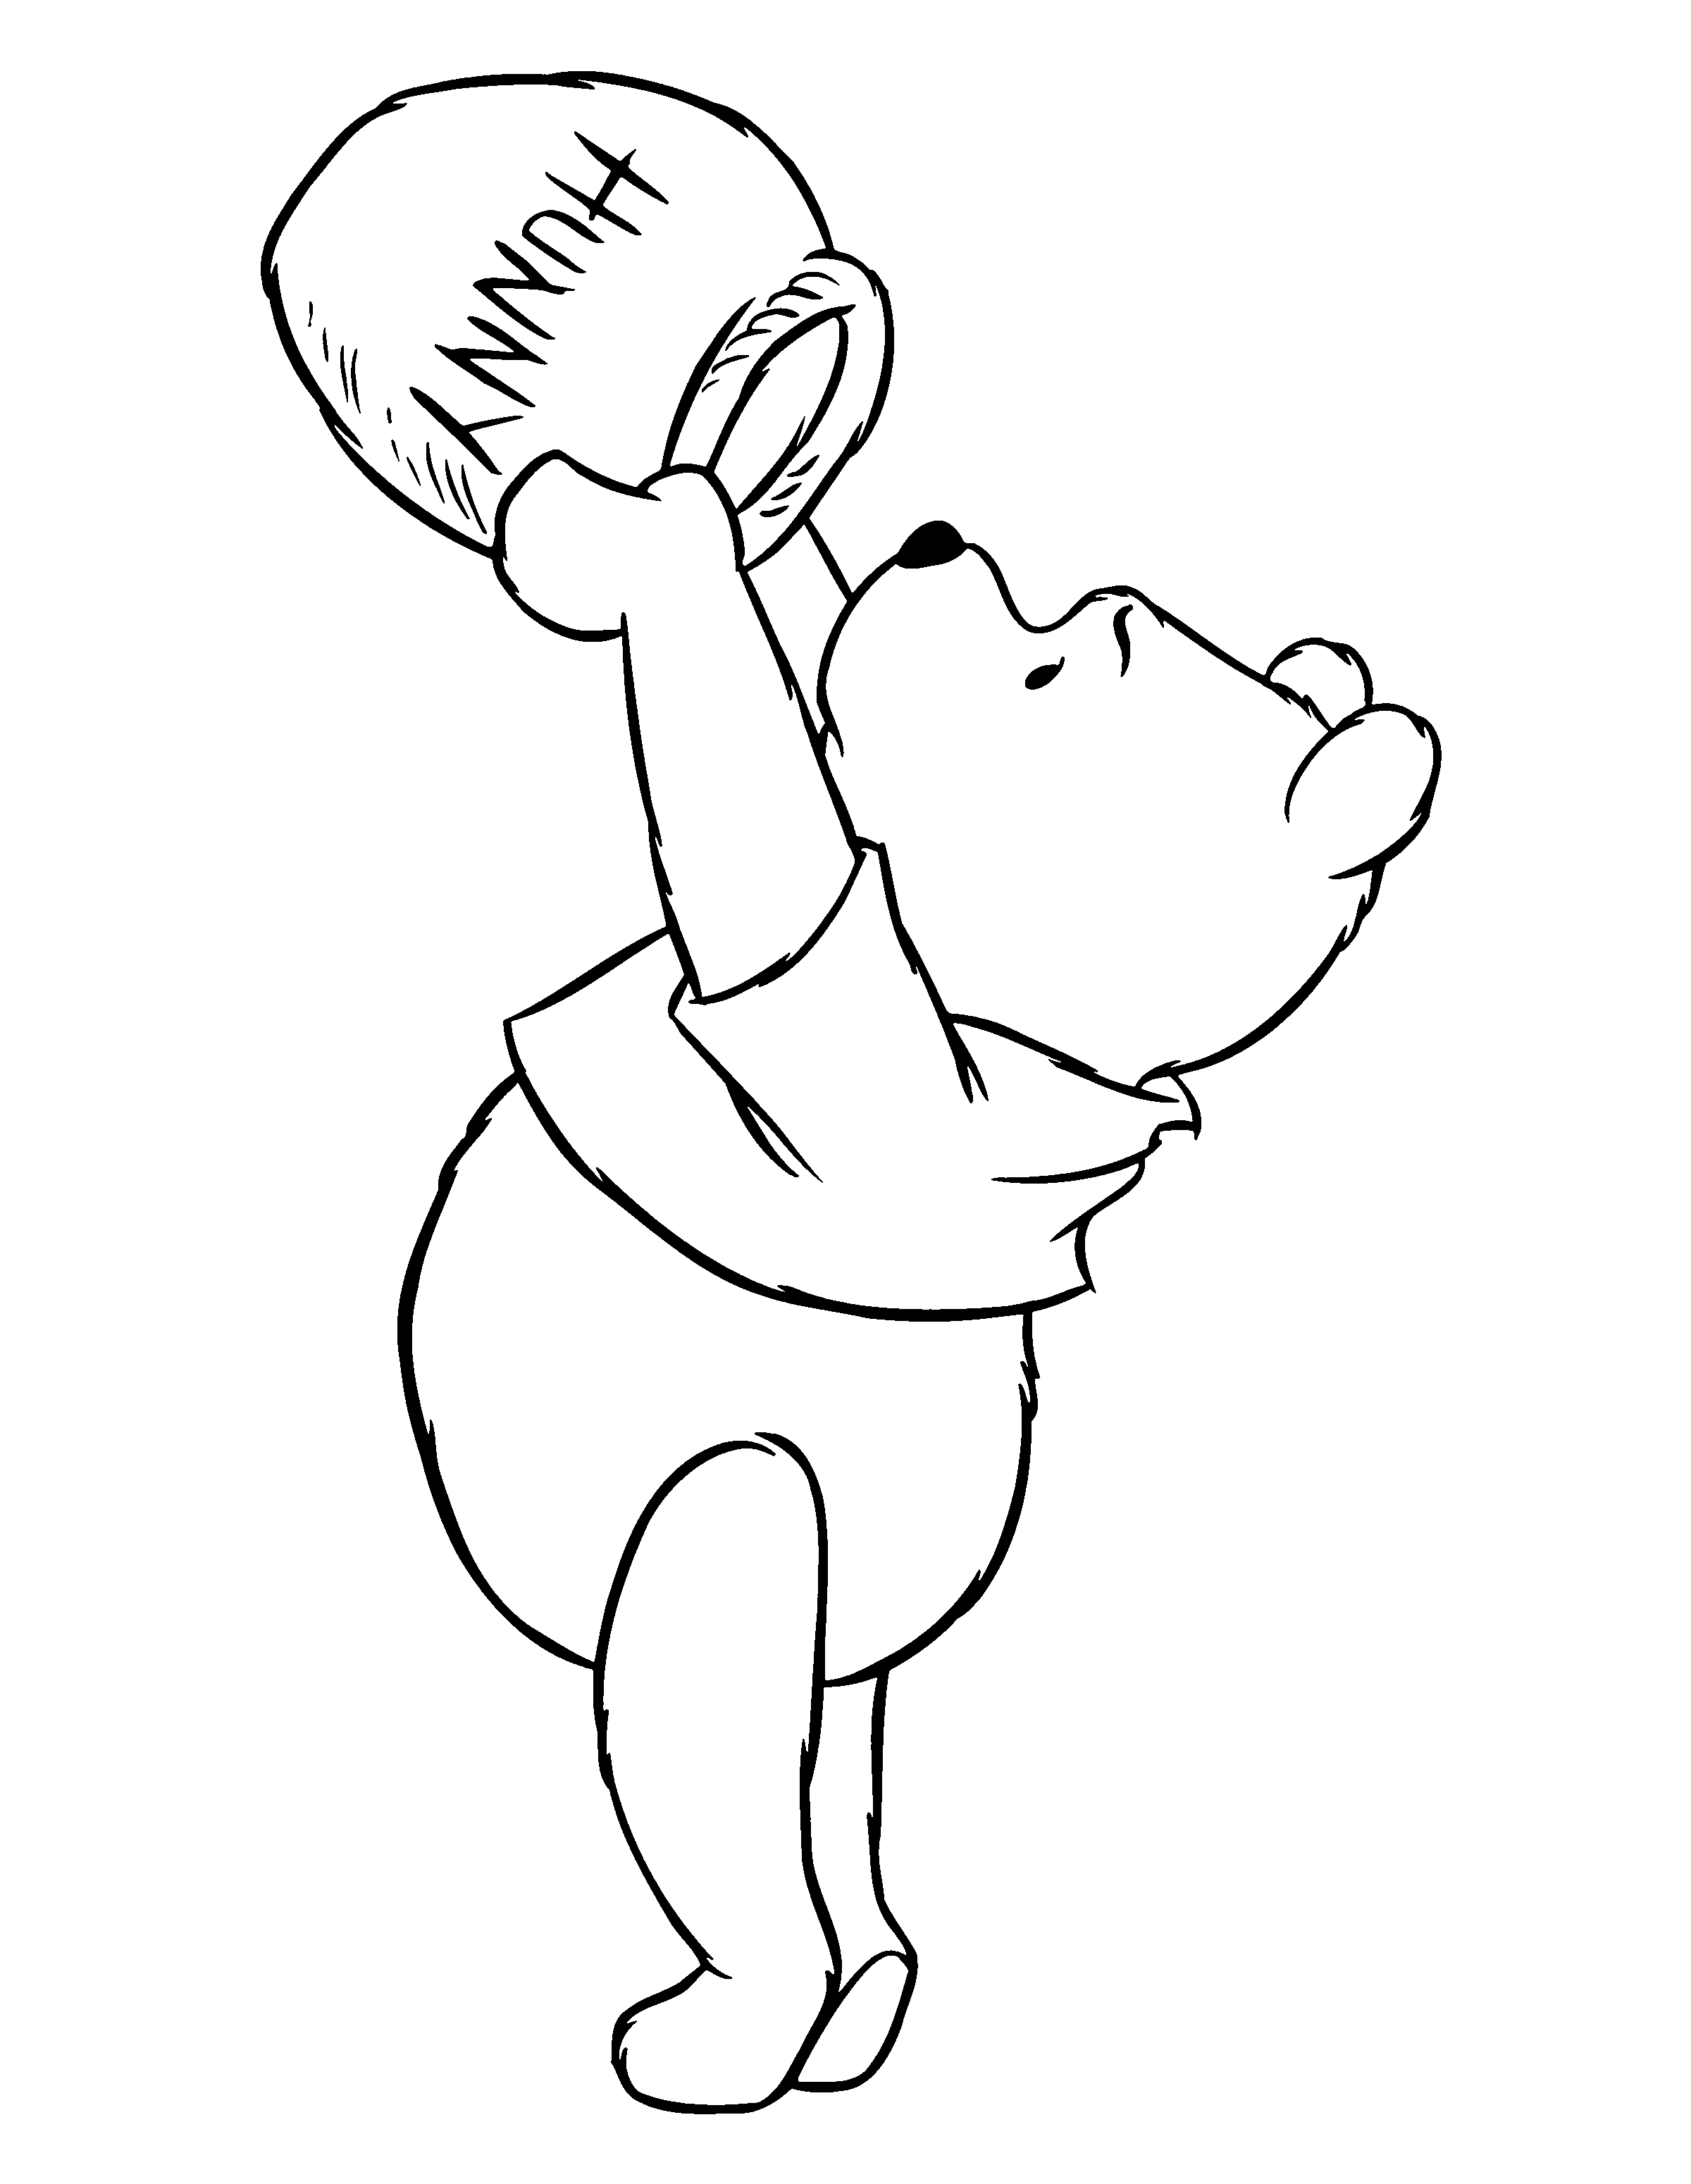 Free Printable Winnie The Pooh